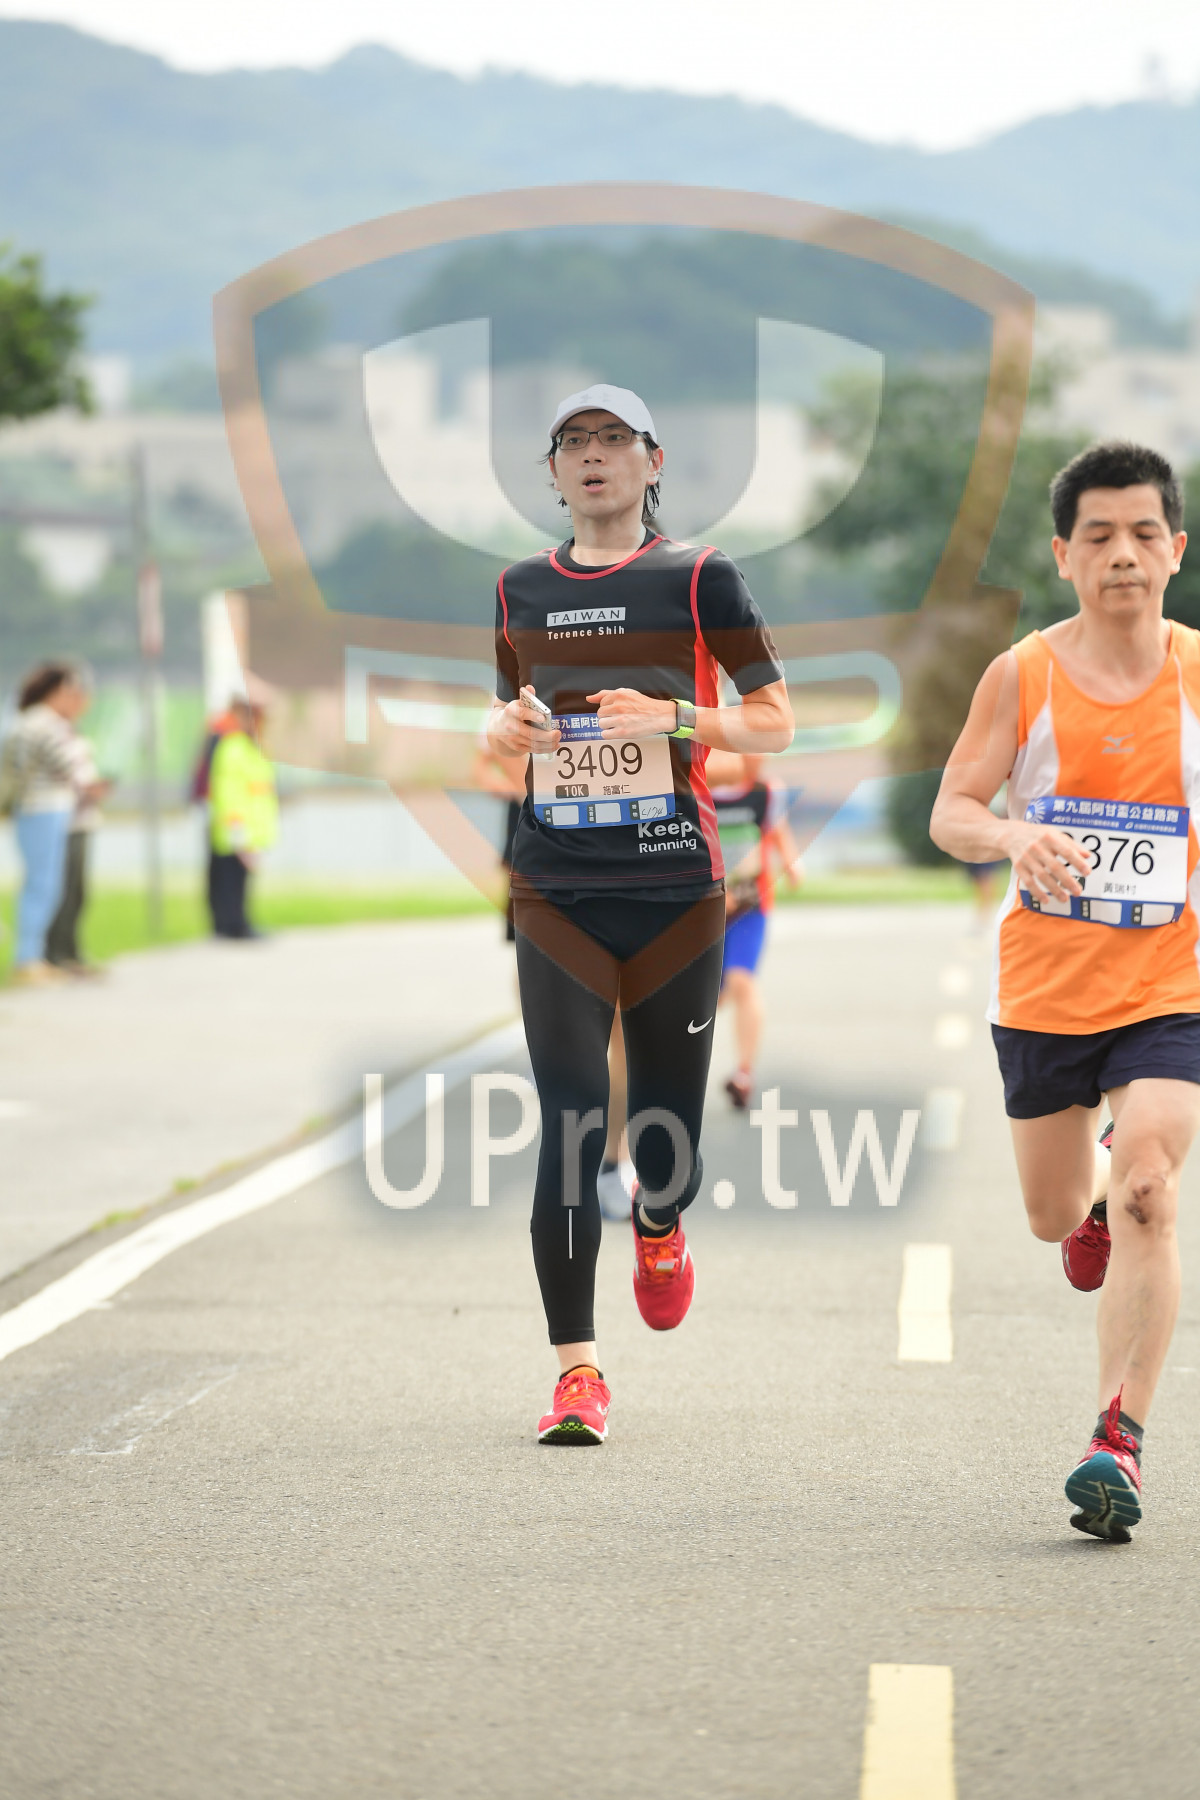 AN,Terence Shih,,3409,,Kee,376,Running|終點1|中年人